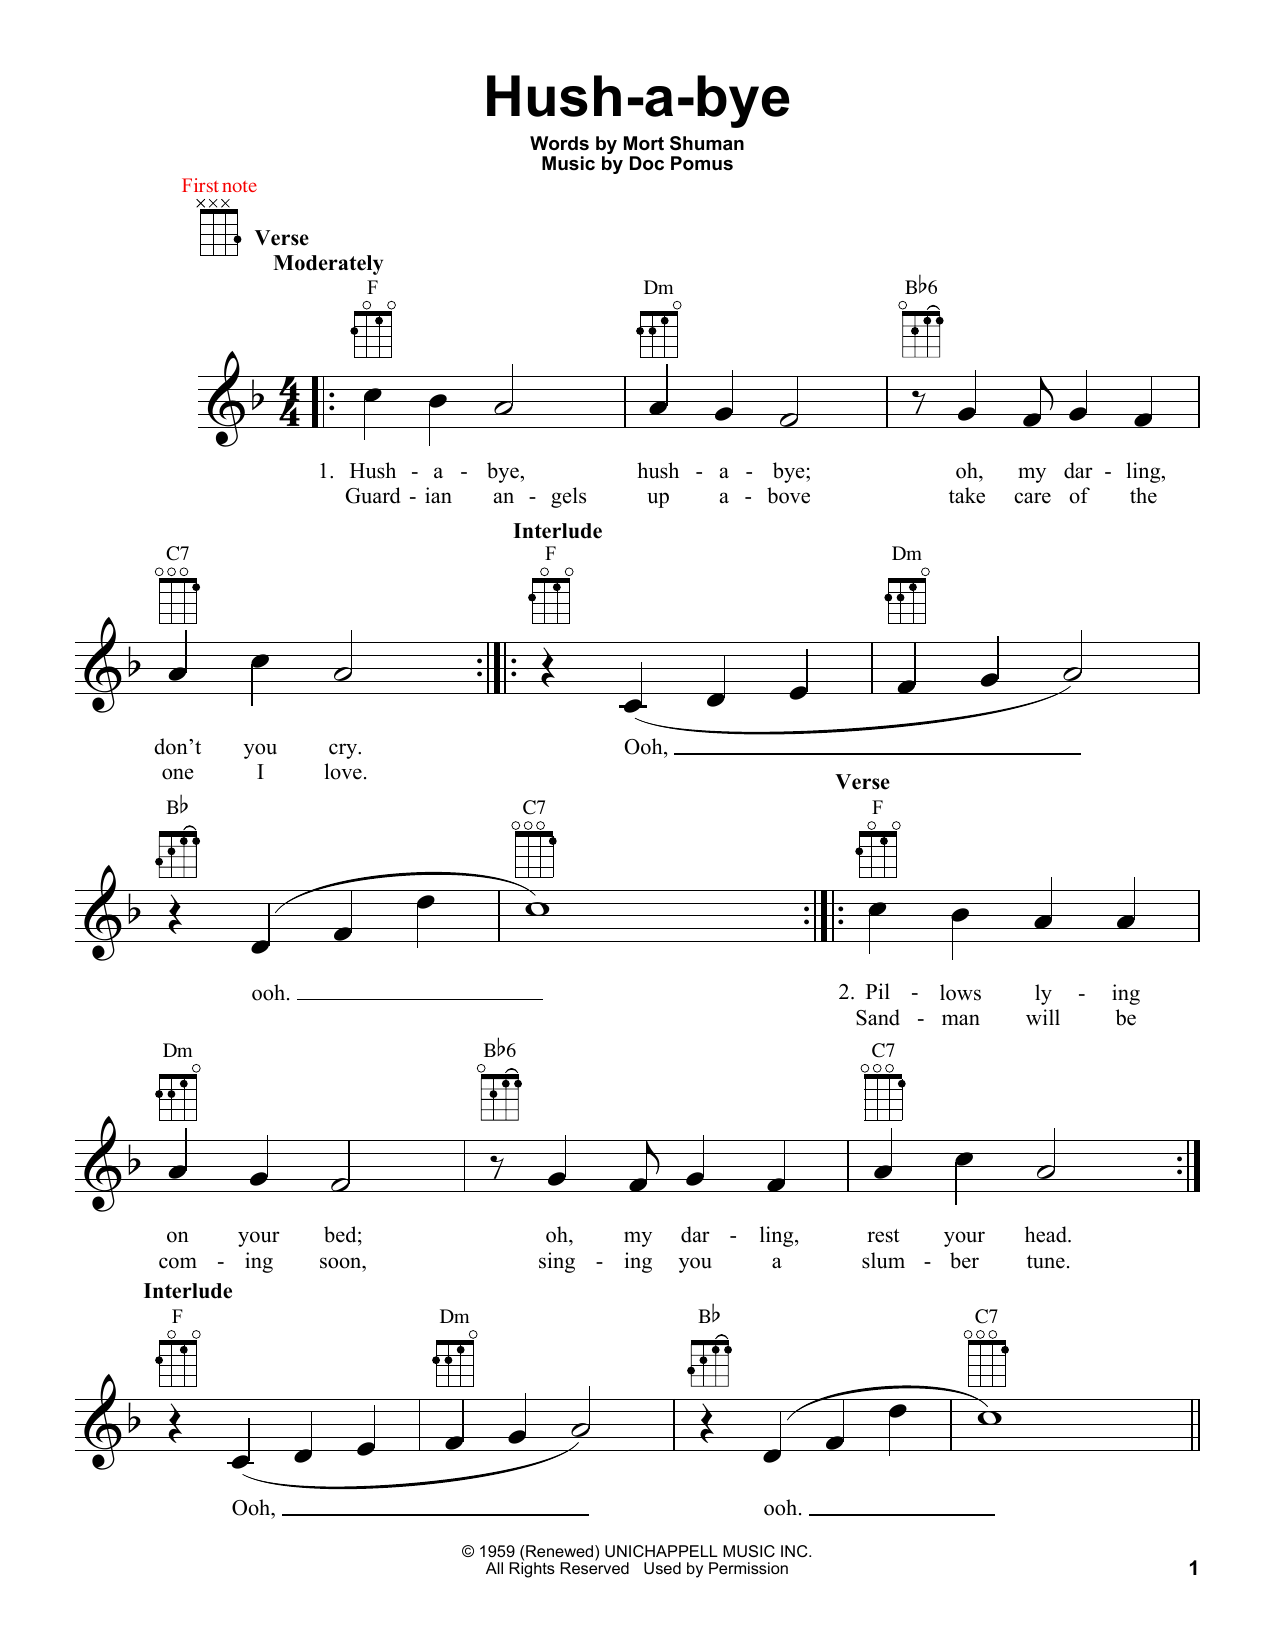 Mystics Hush-a-bye sheet music notes and chords arranged for ChordBuddy